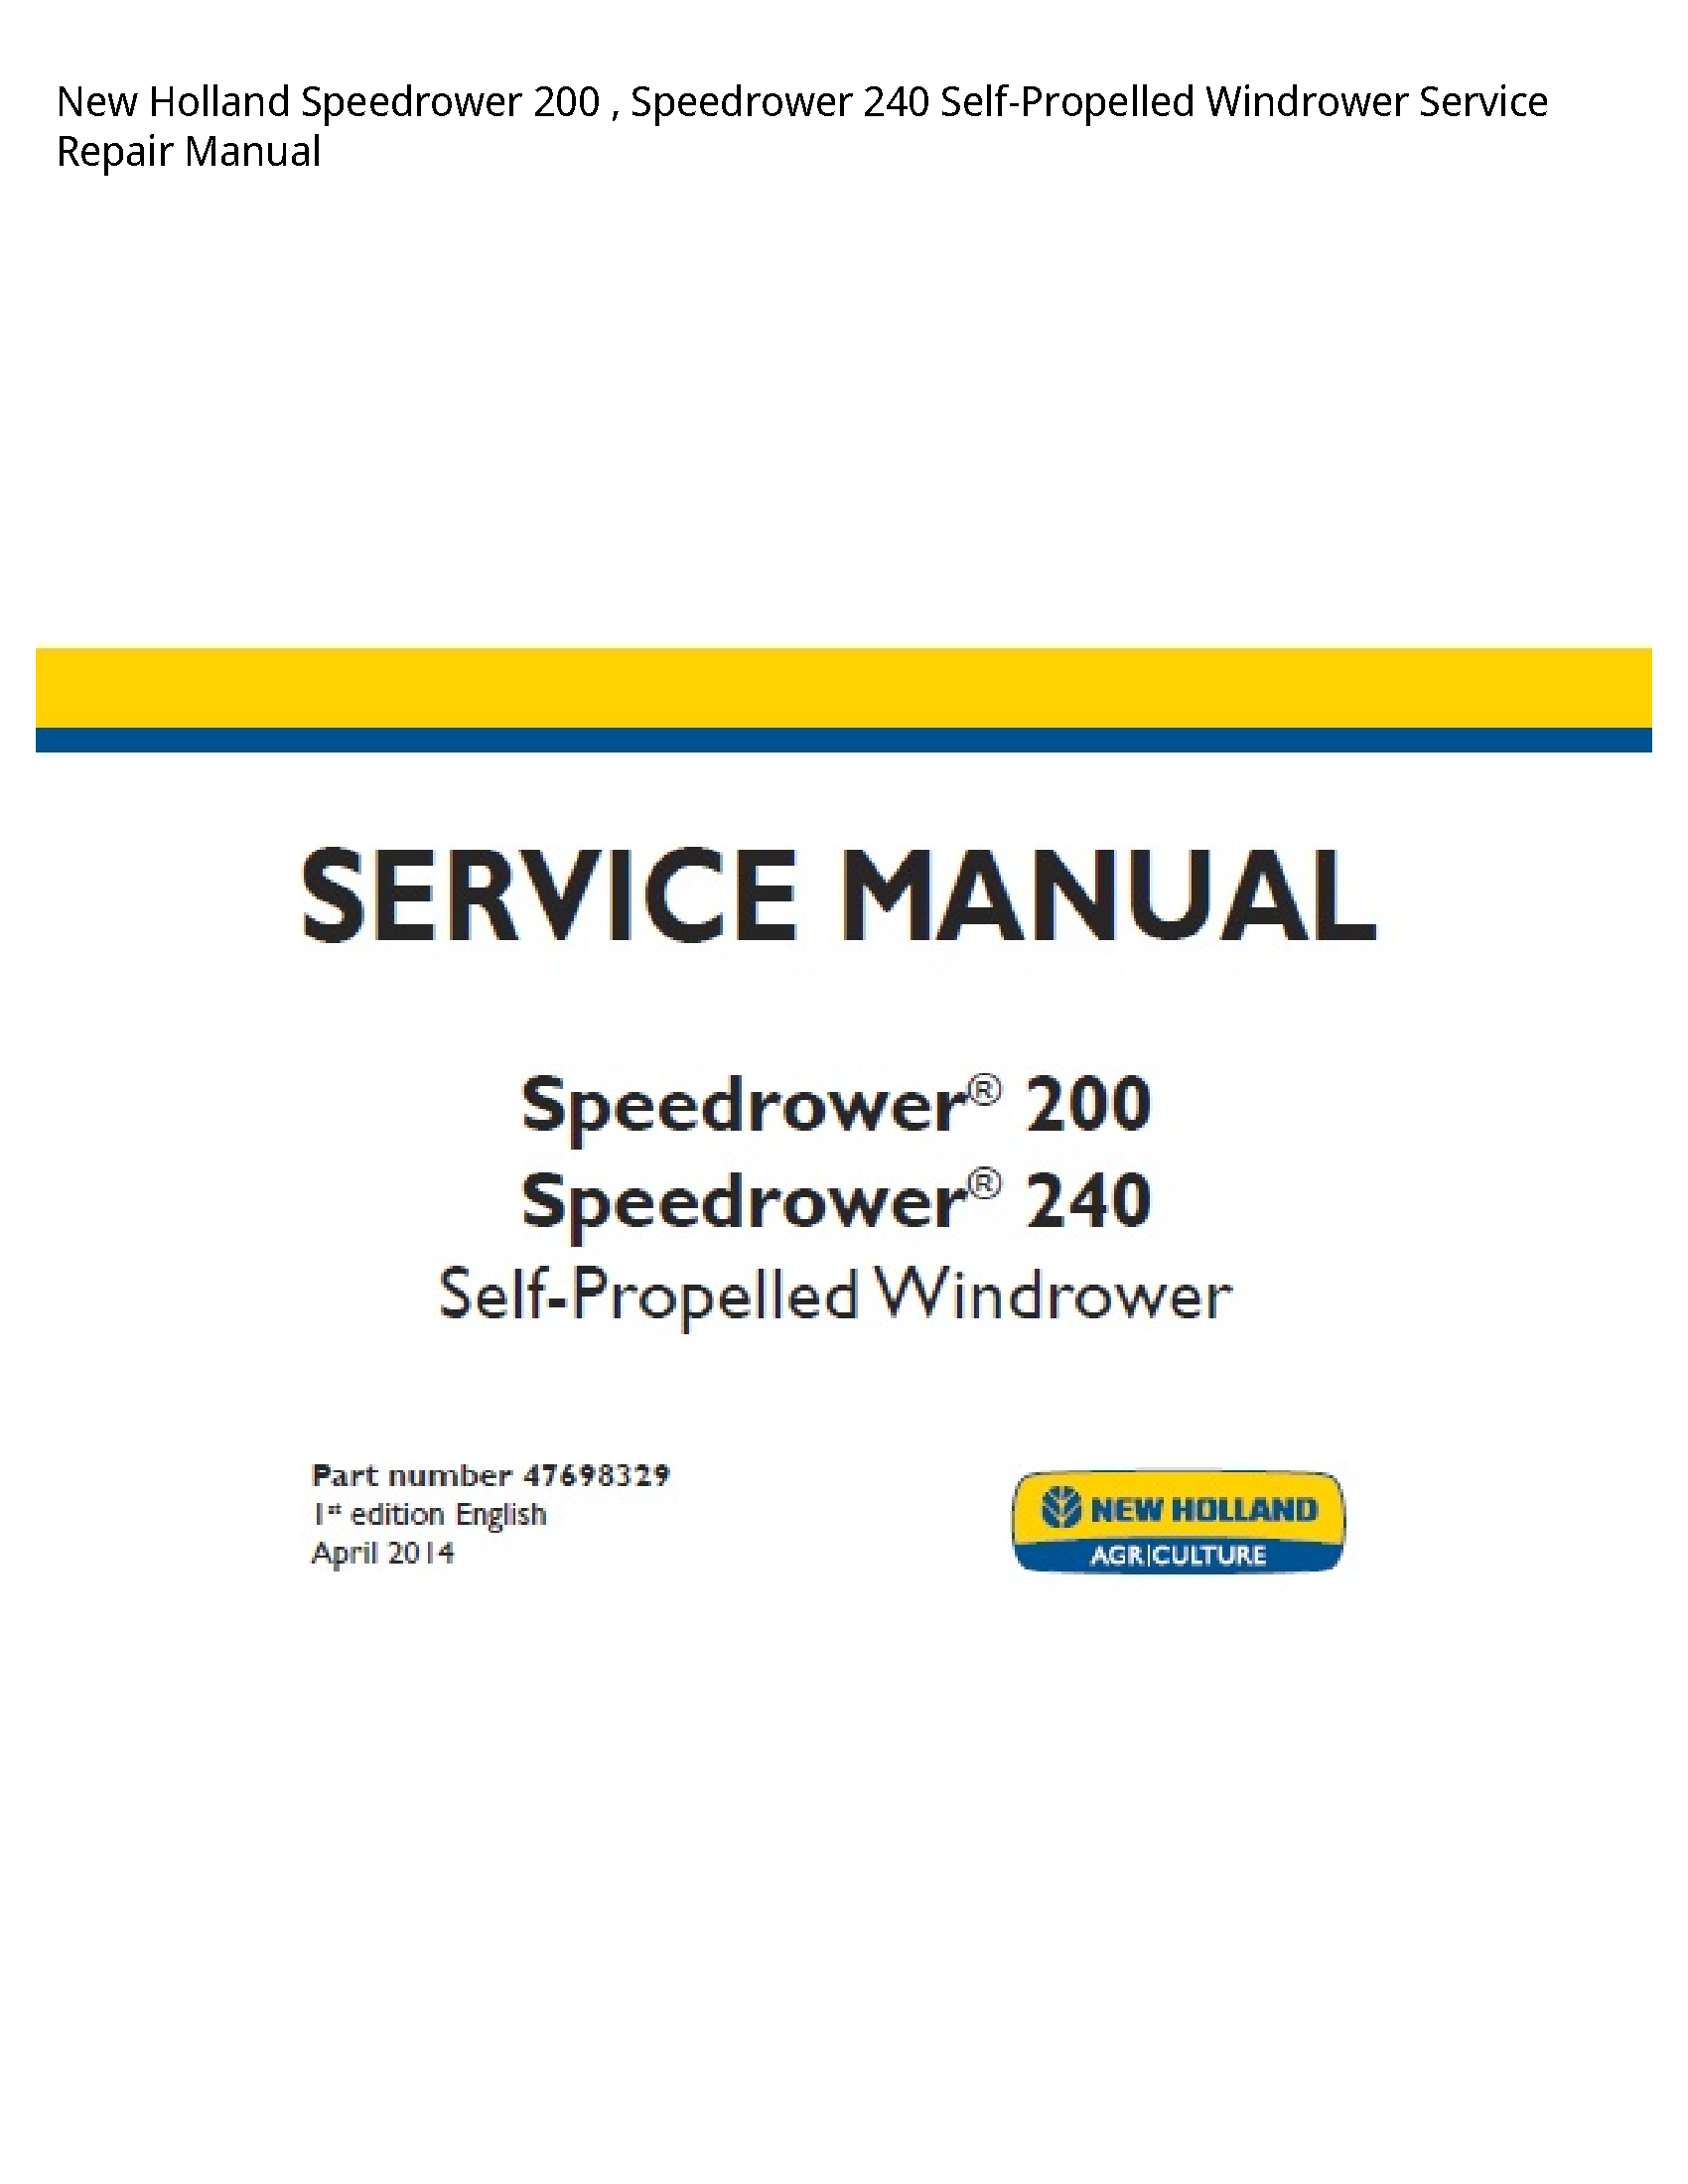 New Holland 200 Speedrower Speedrower Self-Propelled Windrower manual